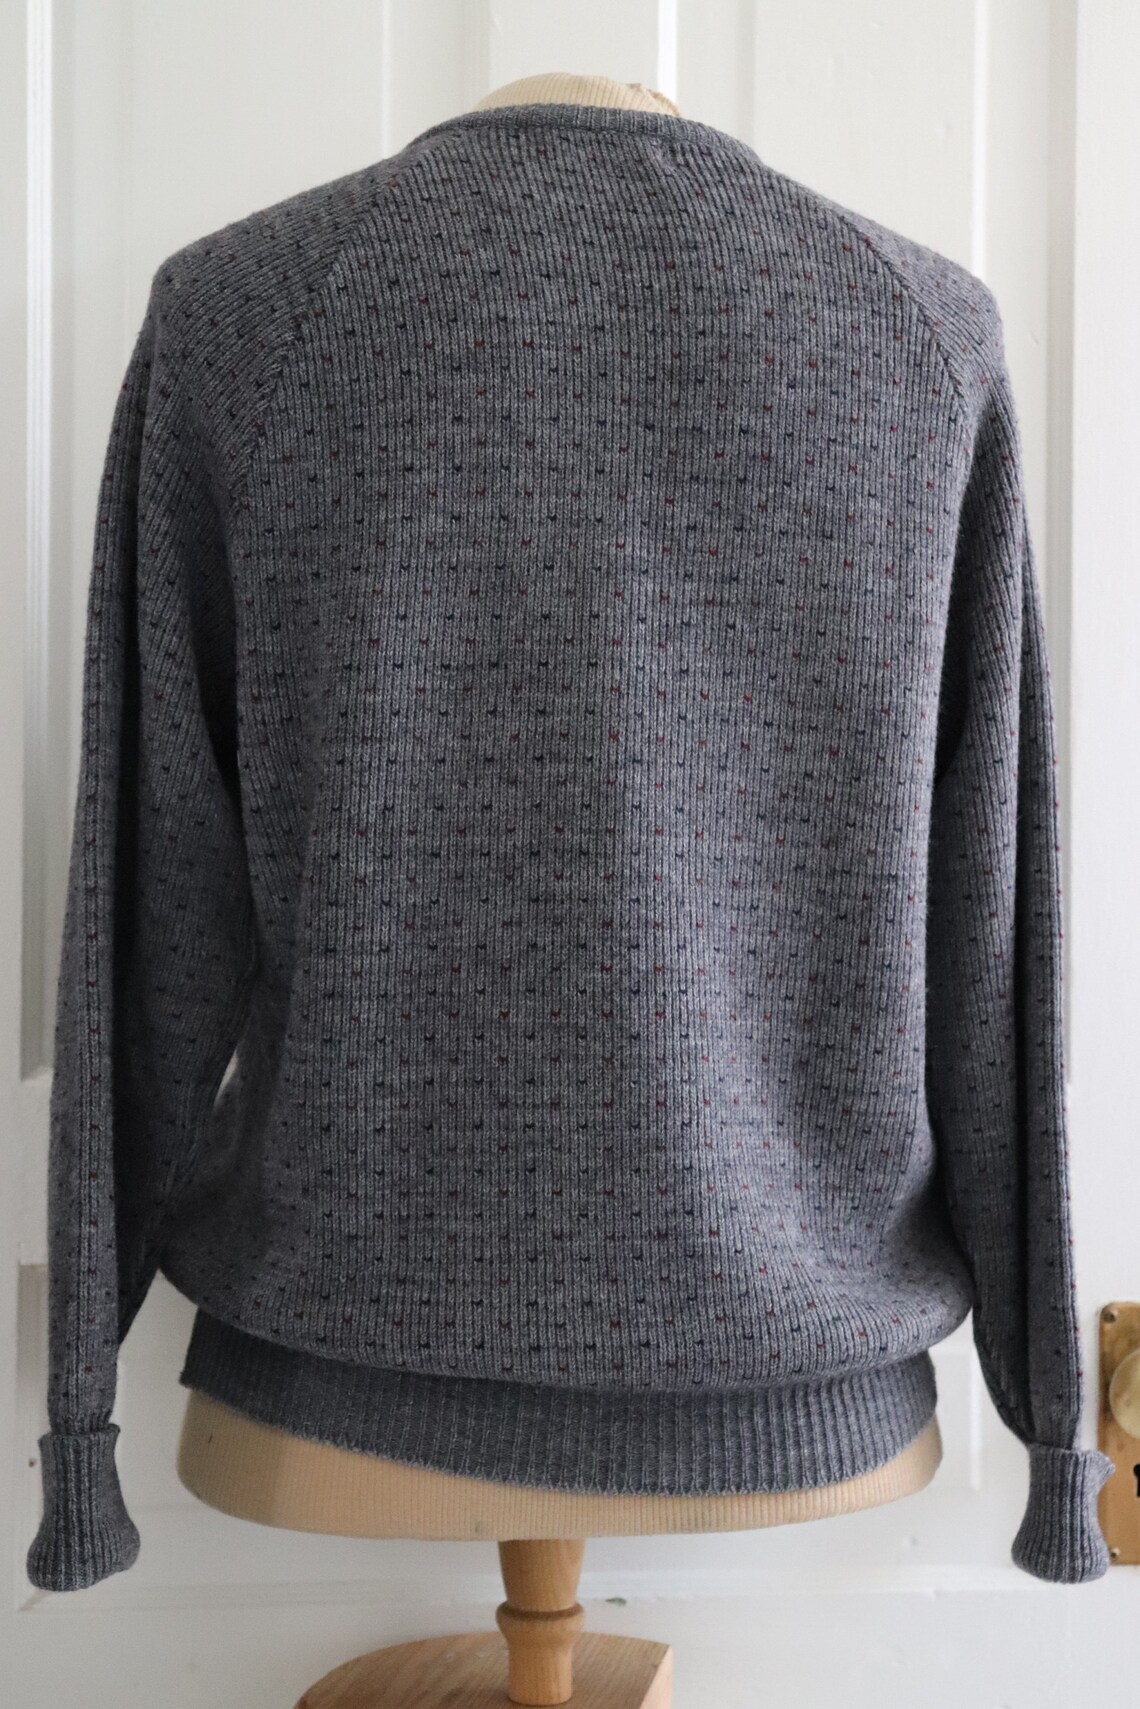 1980's 100% Wool Ingo Dark Grey Heather Tone Sweater made | Etsy